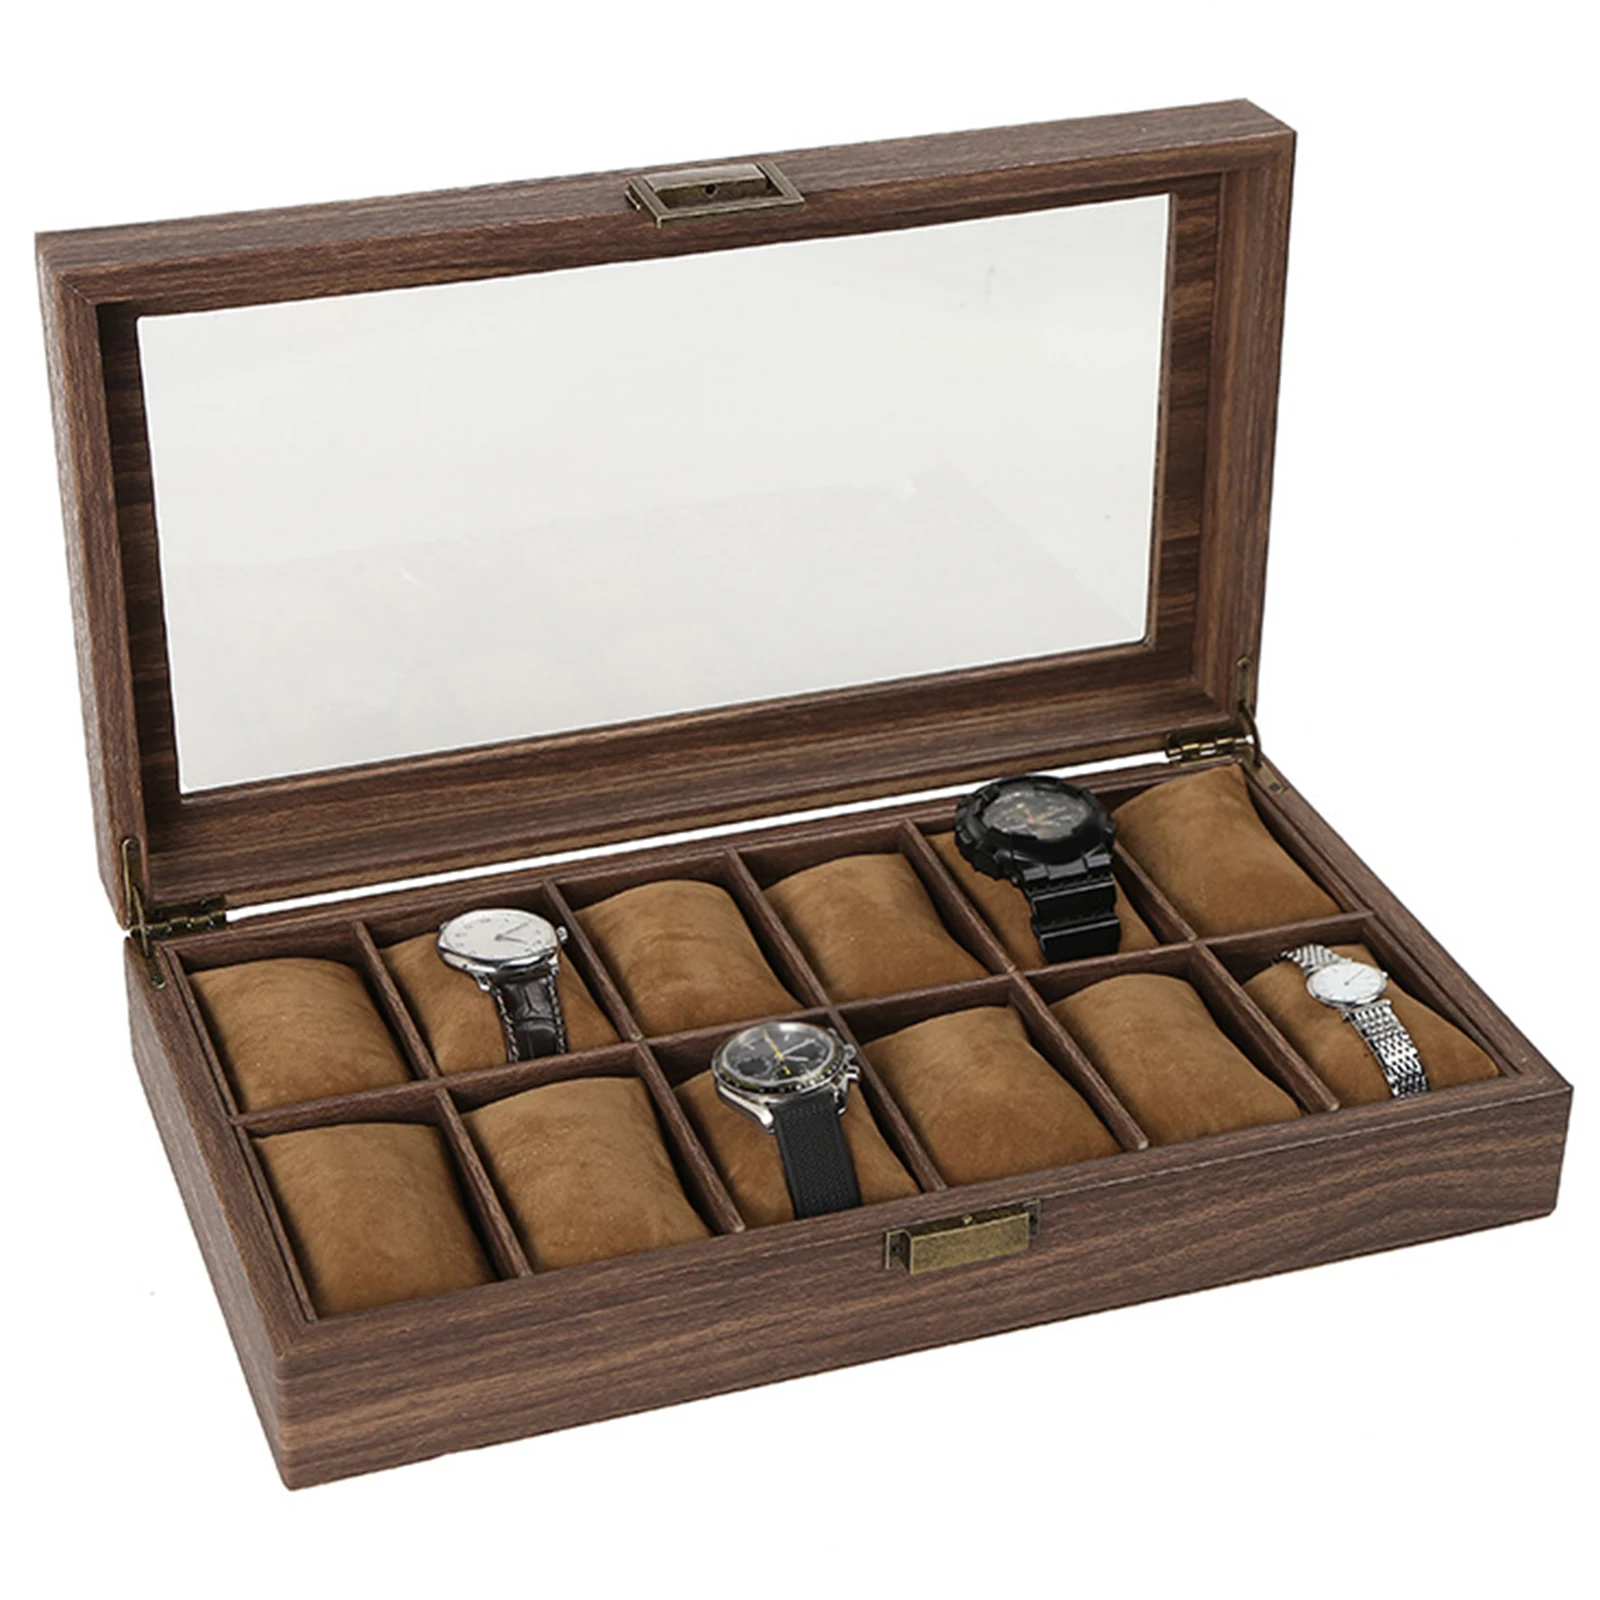 Wooden Watch Box for Men Watch Display Case Wood Luxury Watch Box Large Glass Window, Watch Organizer Box